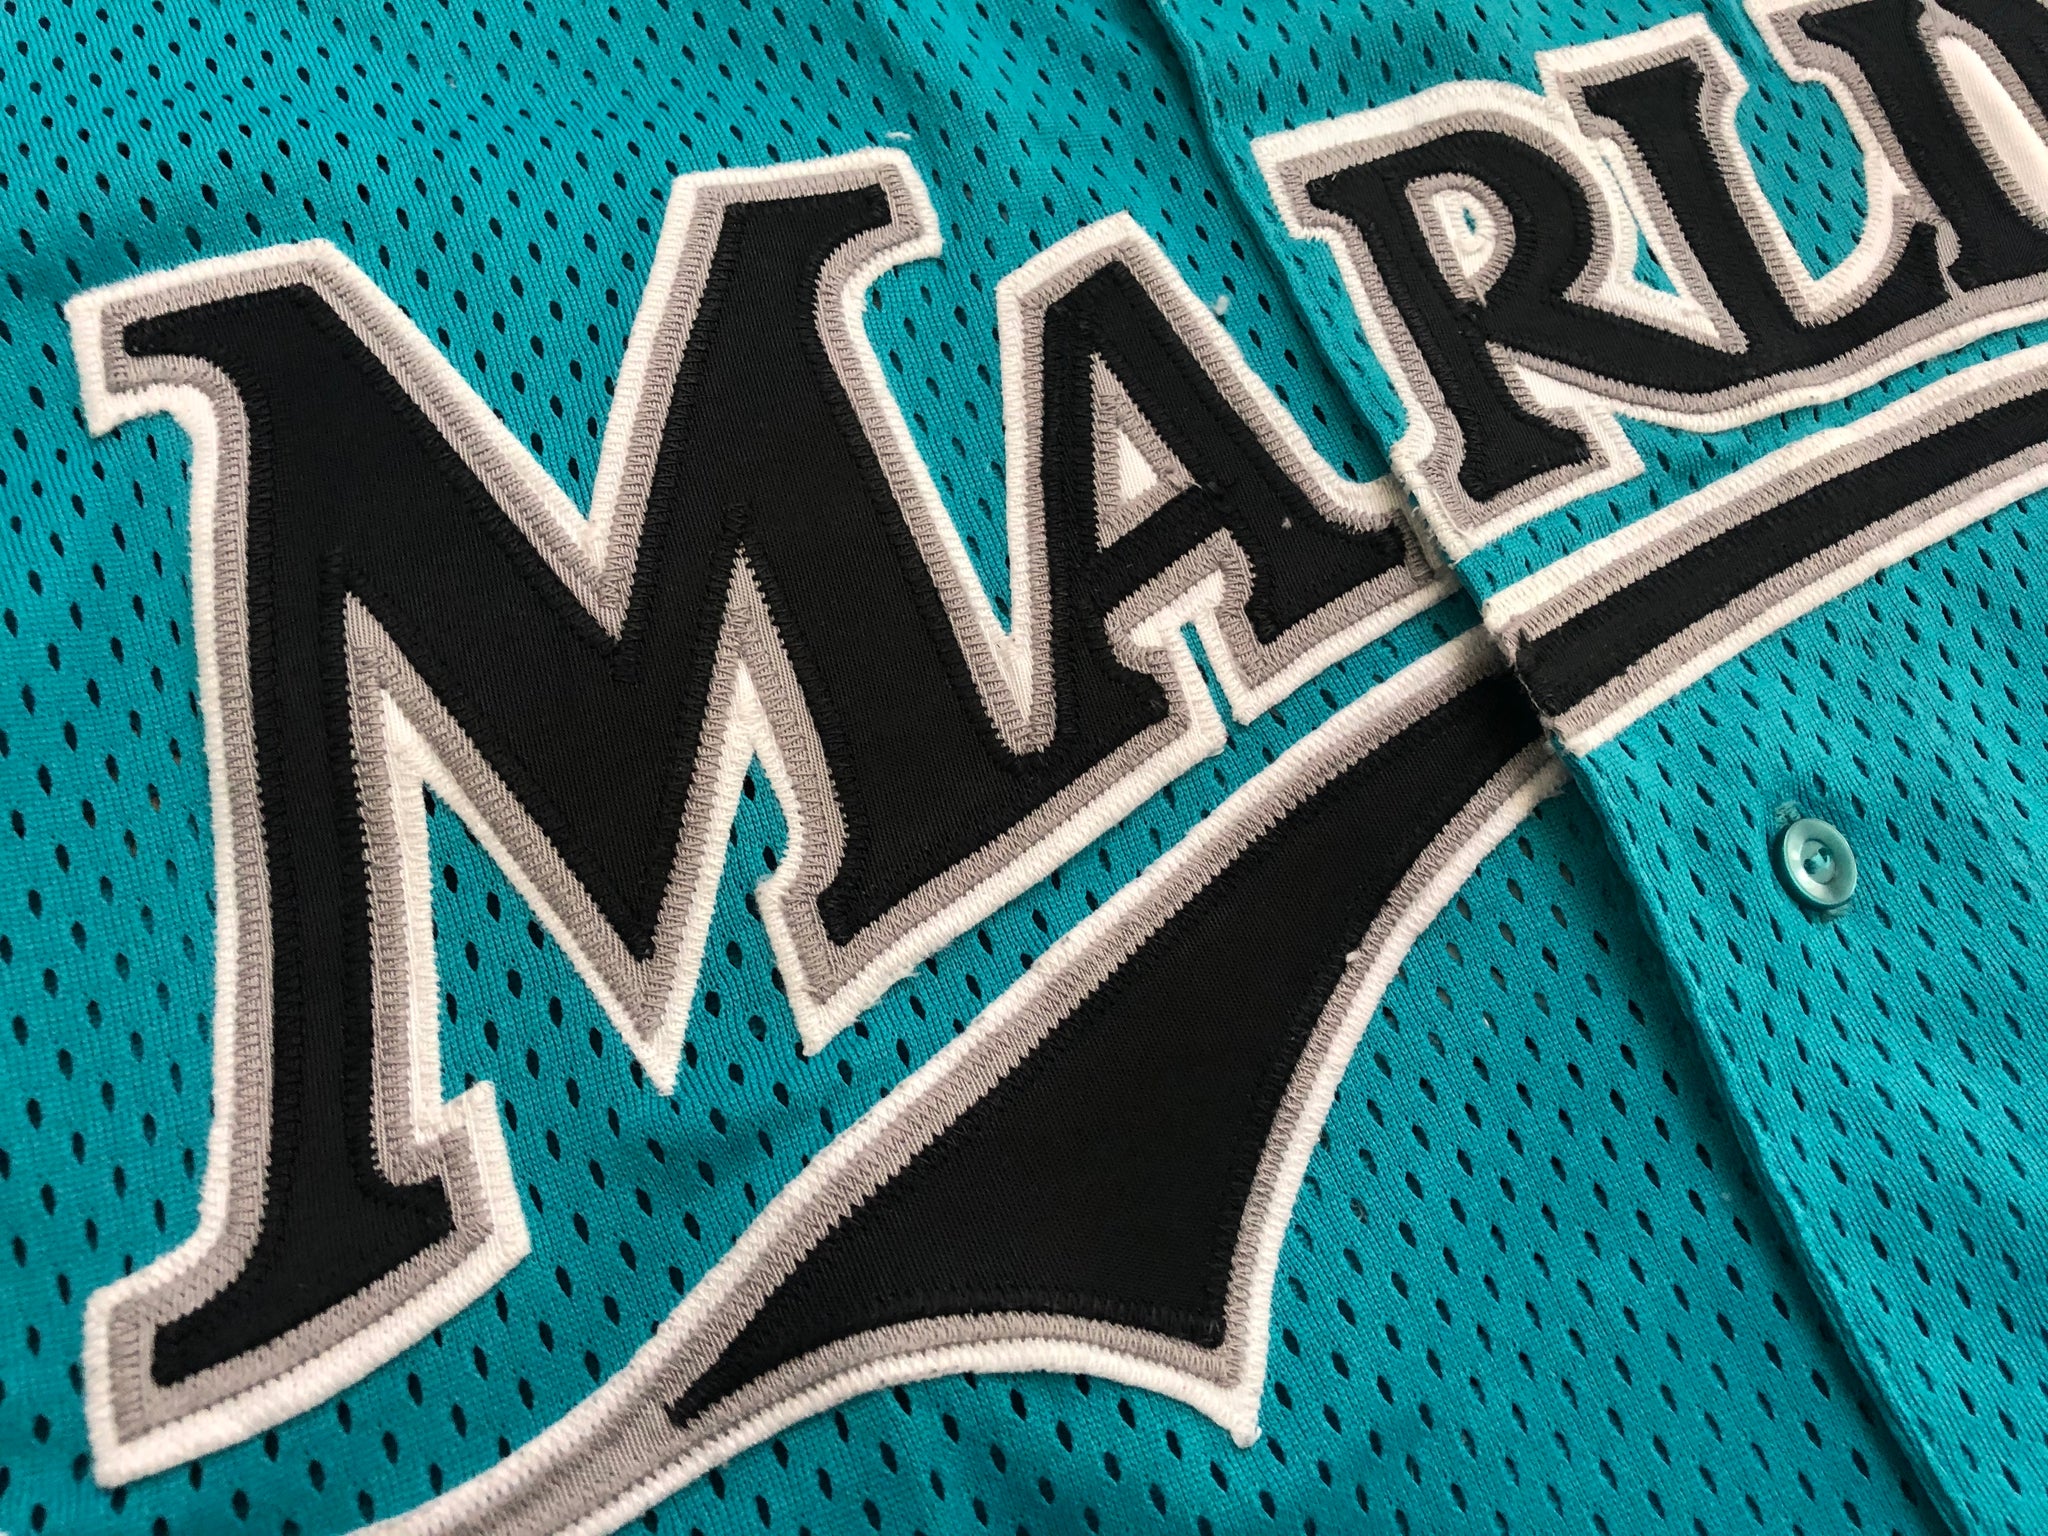 90's Florida Marlins Aqua Authentic Majestic MLB Jersey Size Large